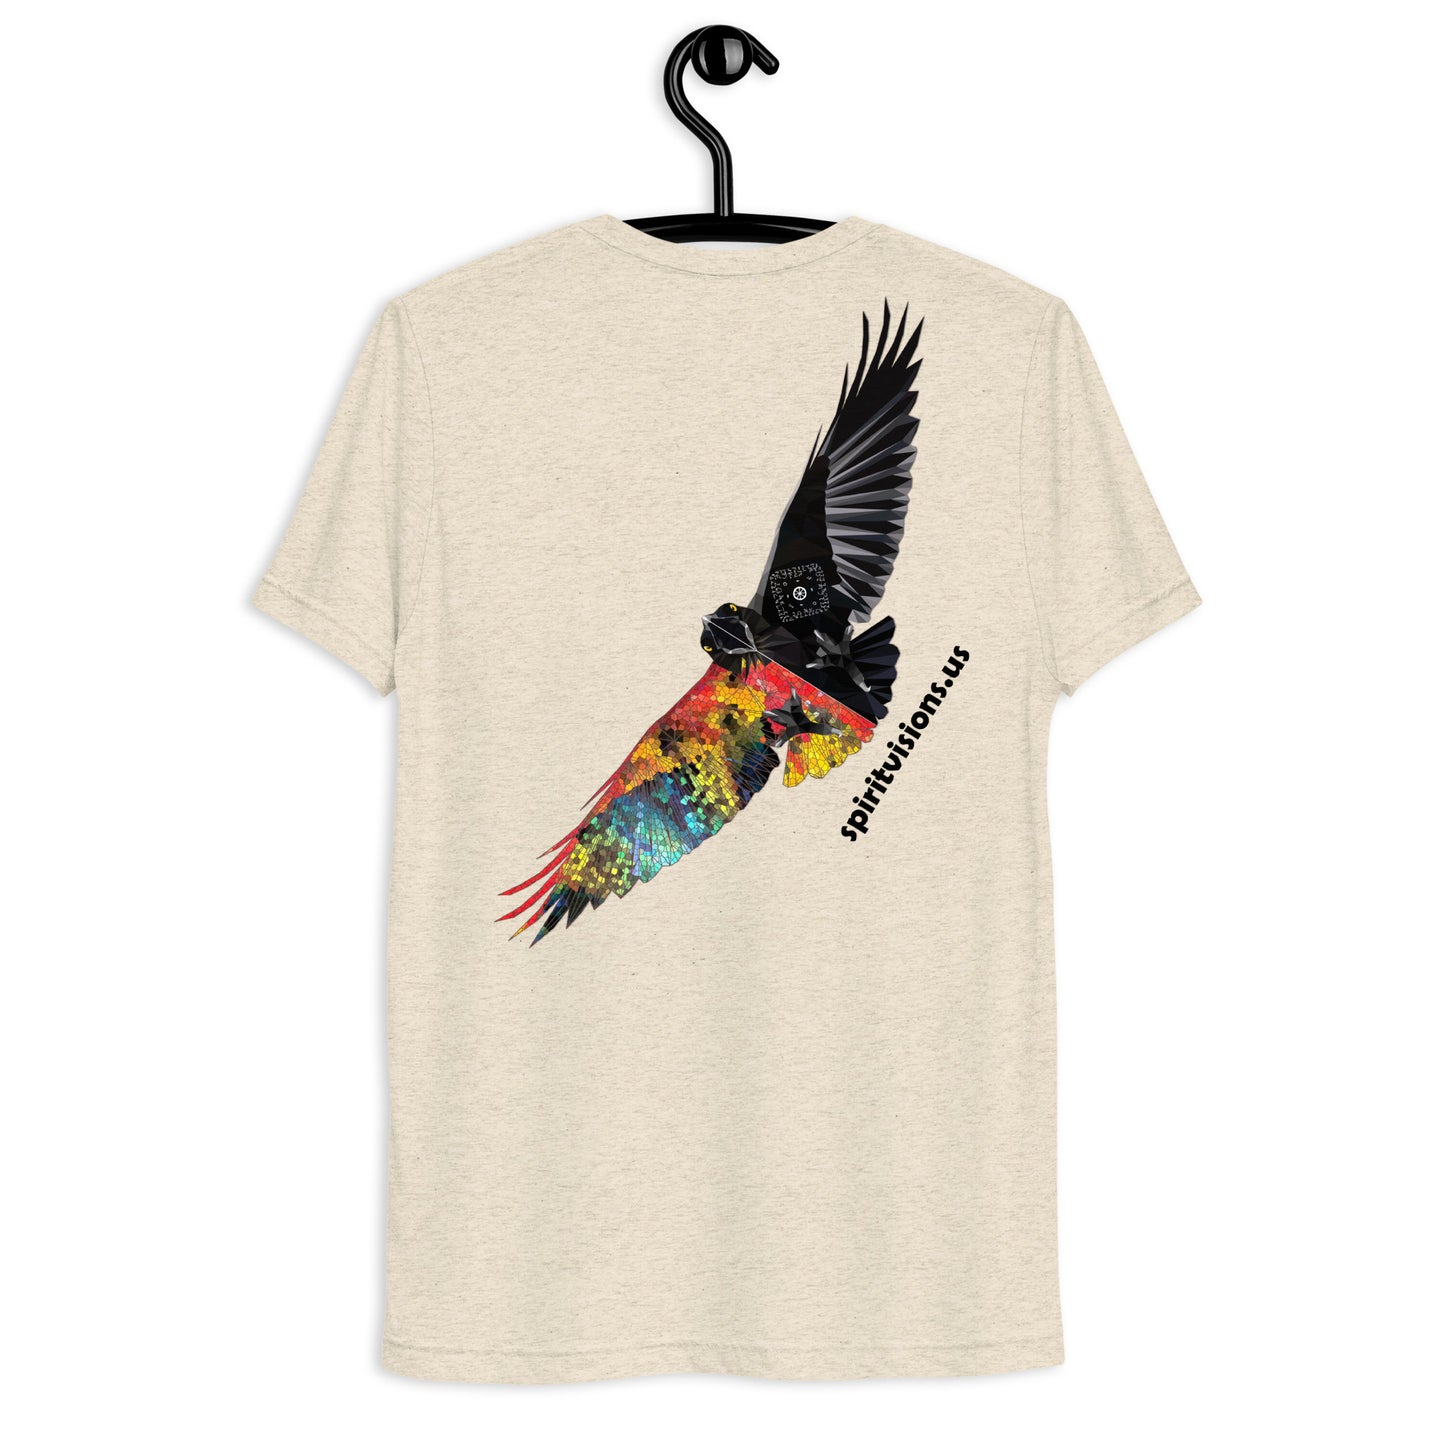 Unisex Short sleeve t-shirt "Big Bird"